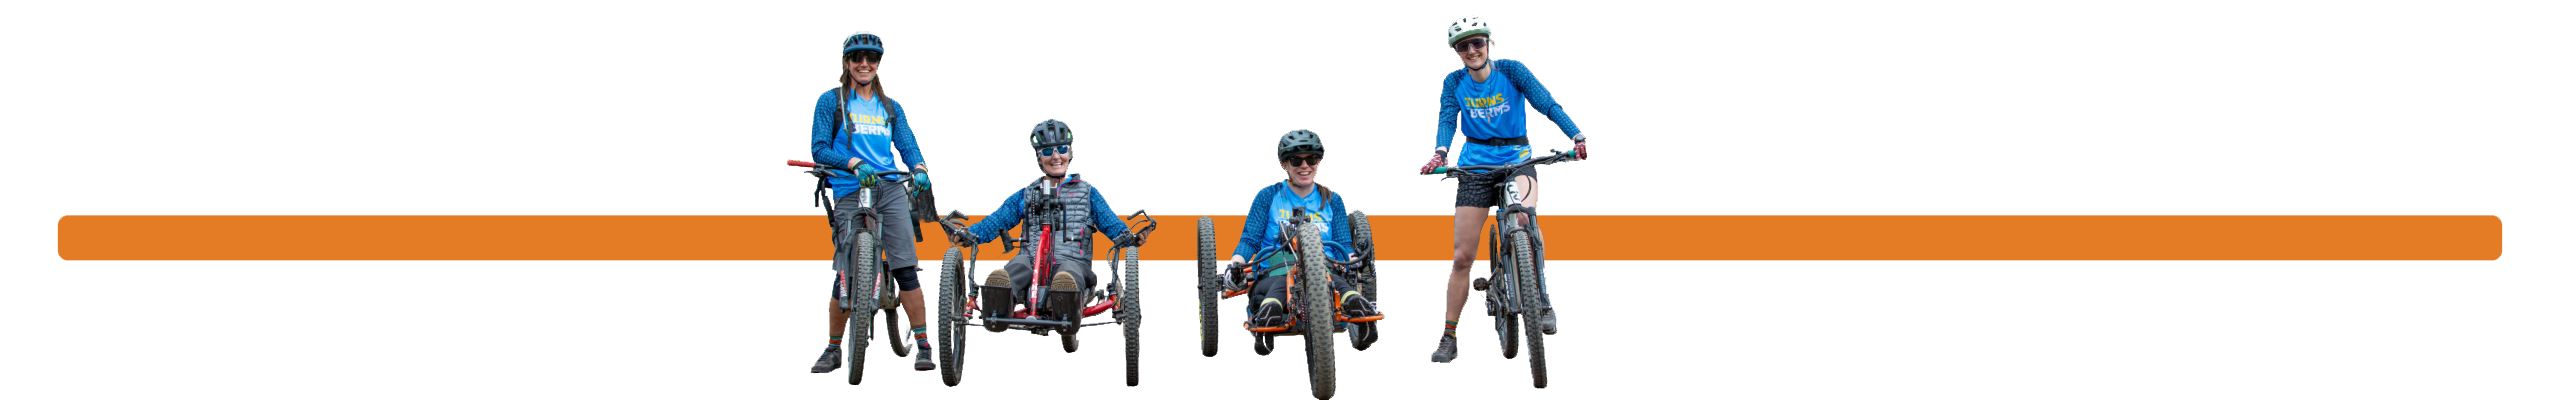 Orange bar with two adaptive mountain bikers and OAS volunteers on mountain bikes.